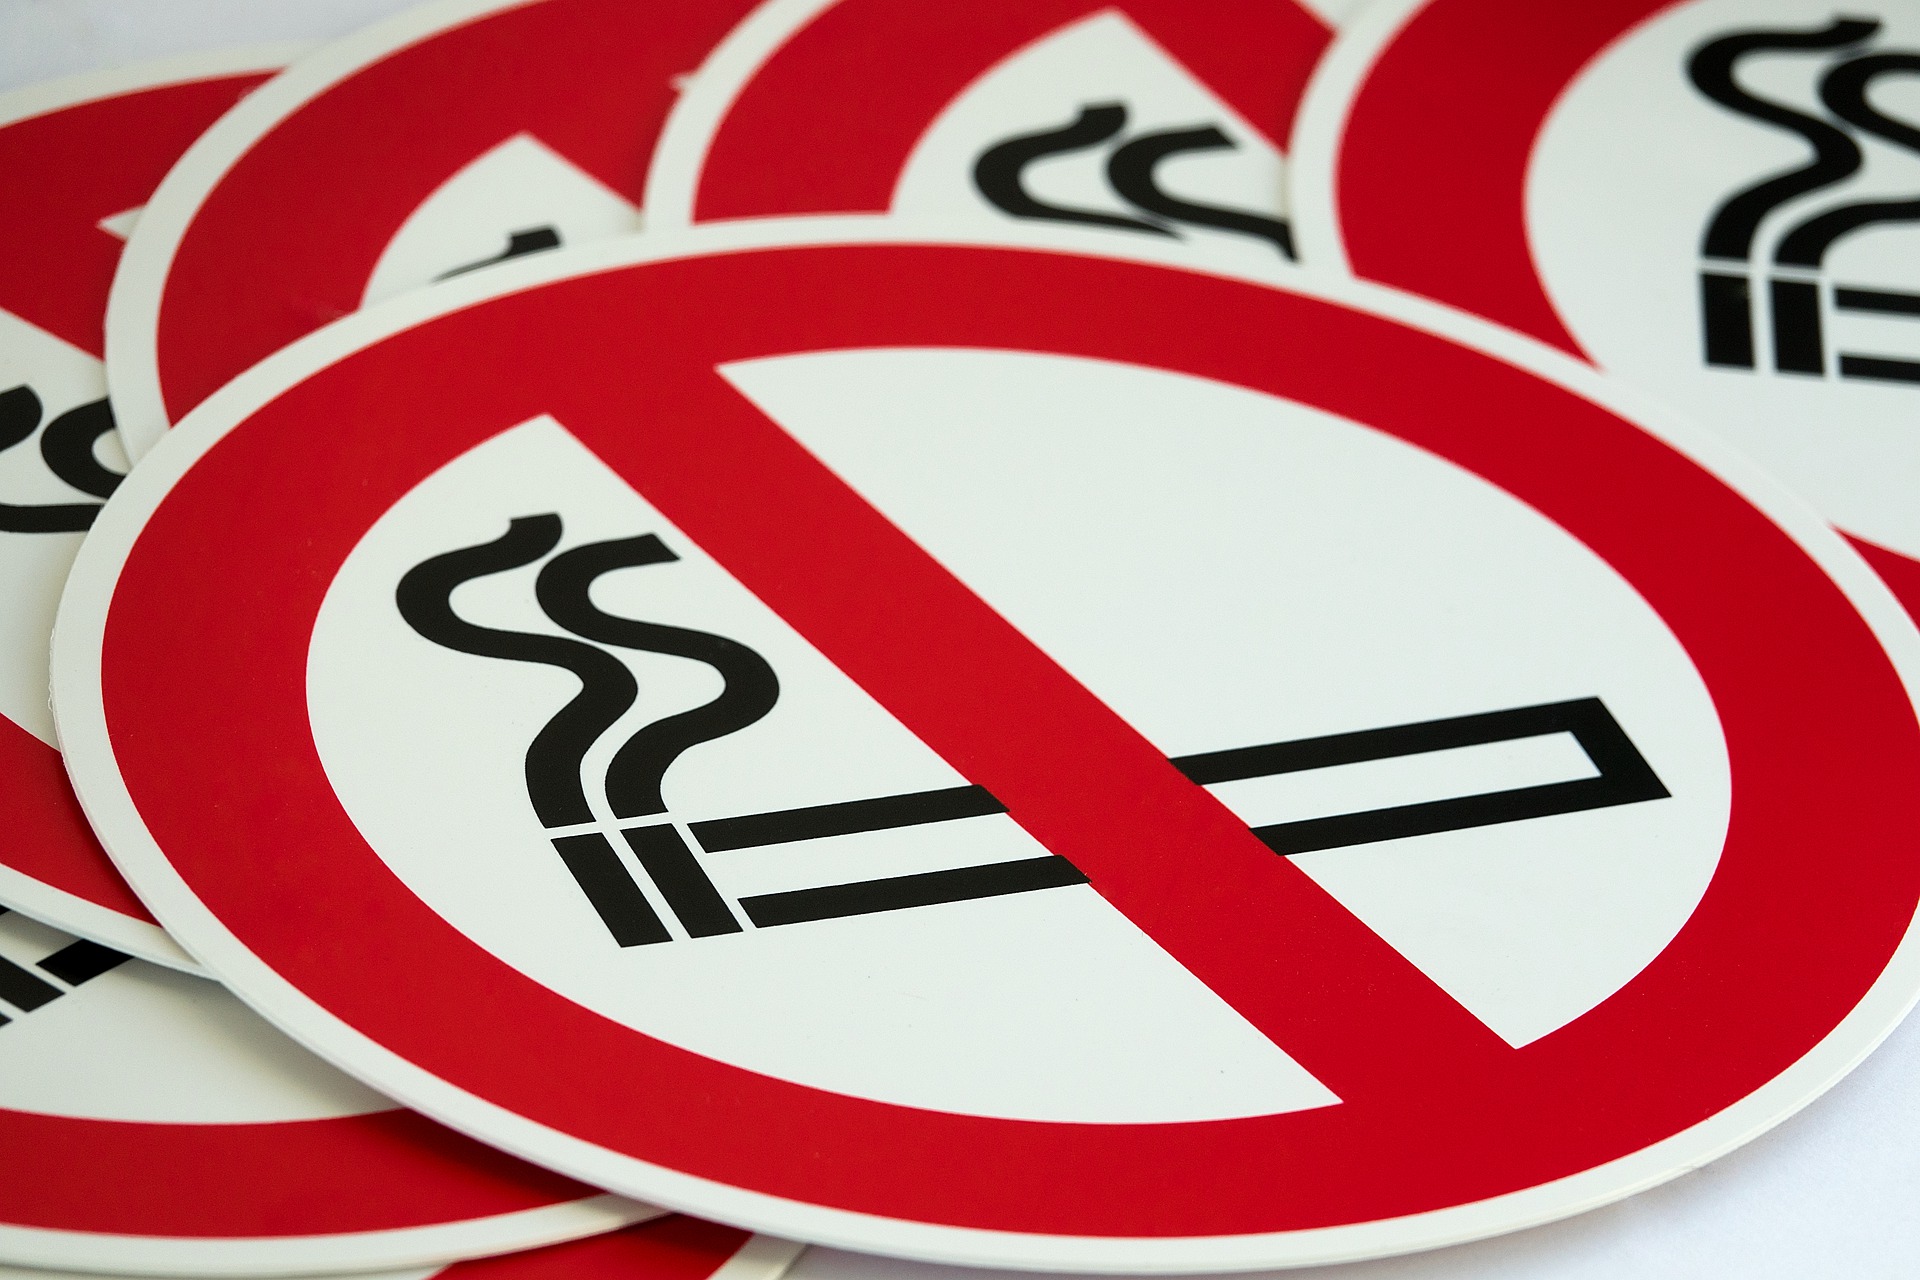 Lidl slutar sälja tobak i Nederländerna